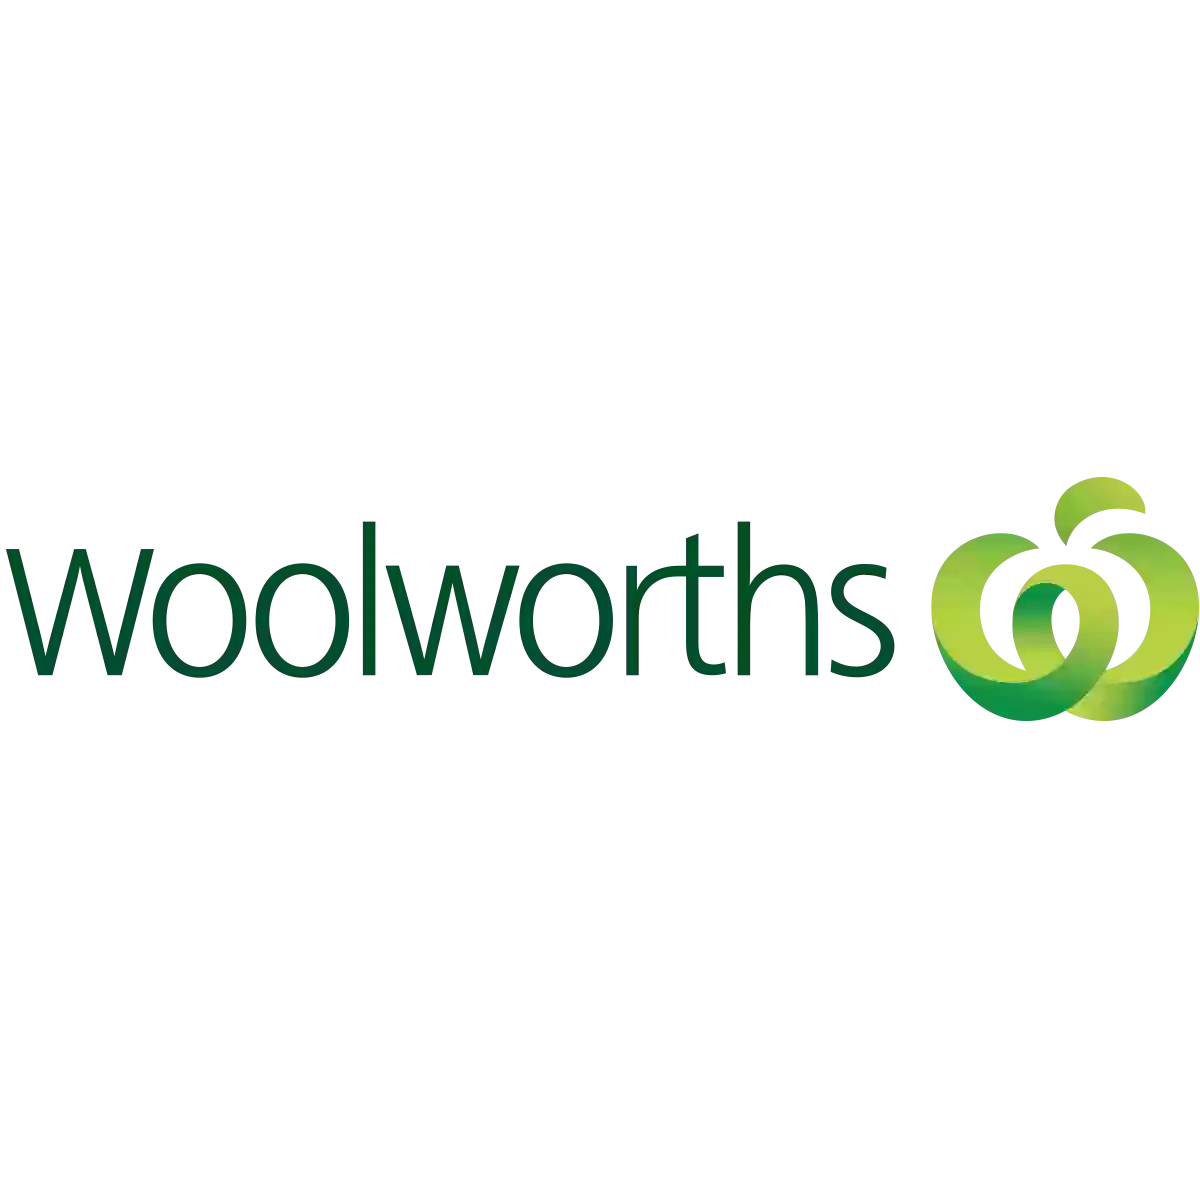 Woolworths Corio